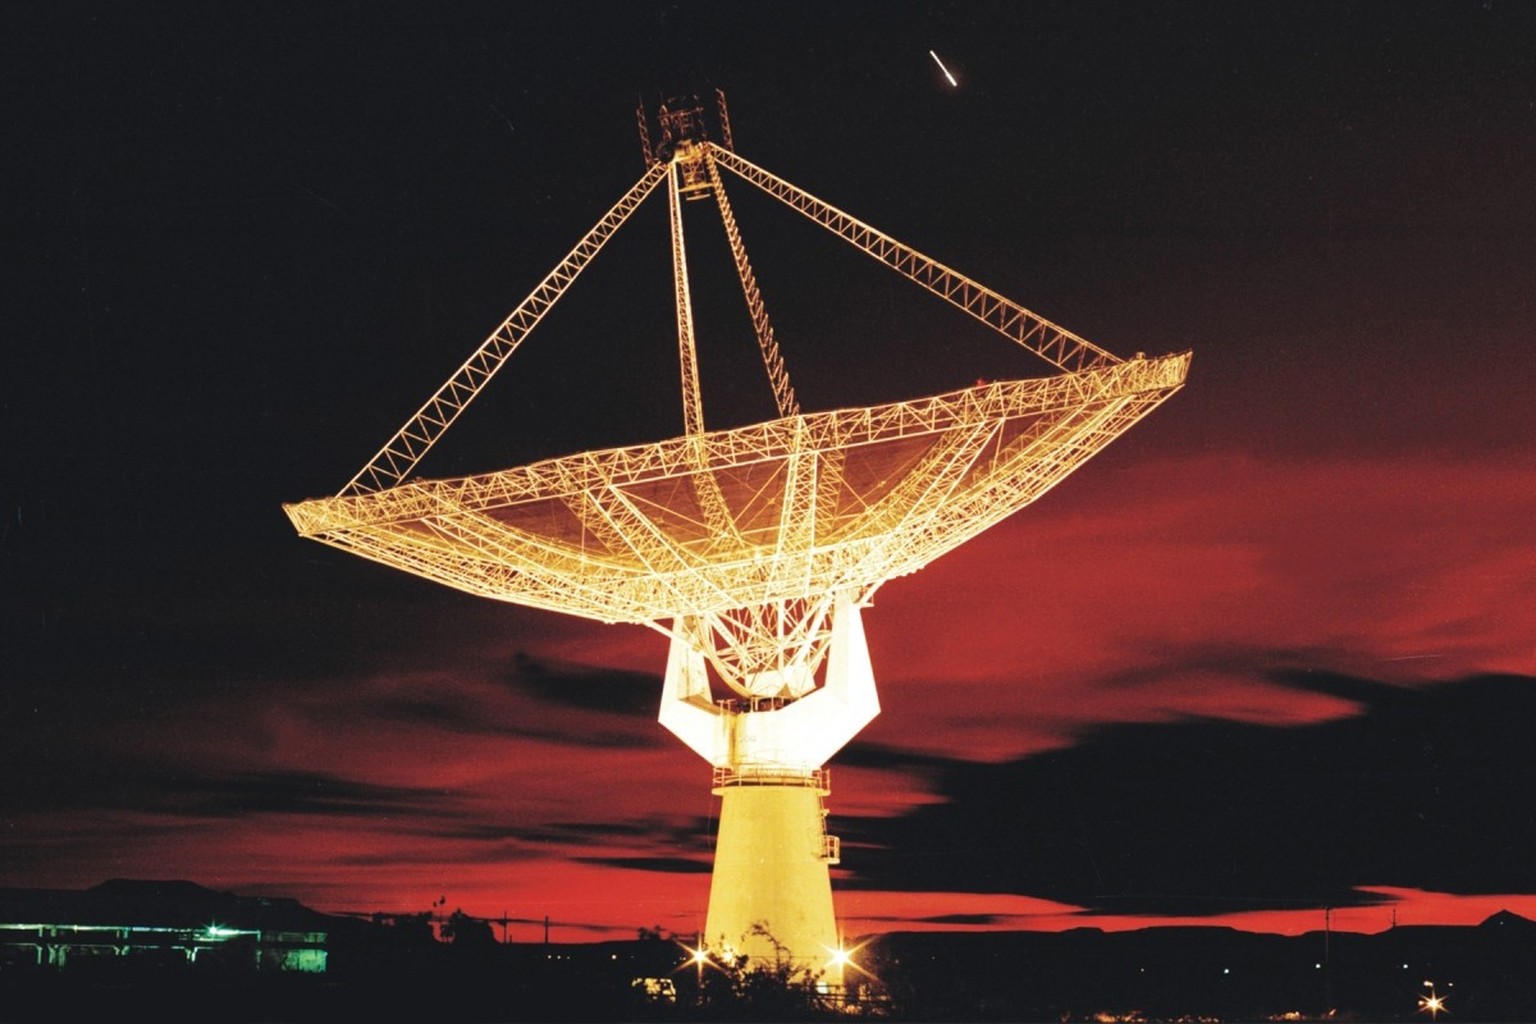 One of the dishes of the Giant Metrewave Radio Telescope (GMRT) near Pune, Maharashtra, India.